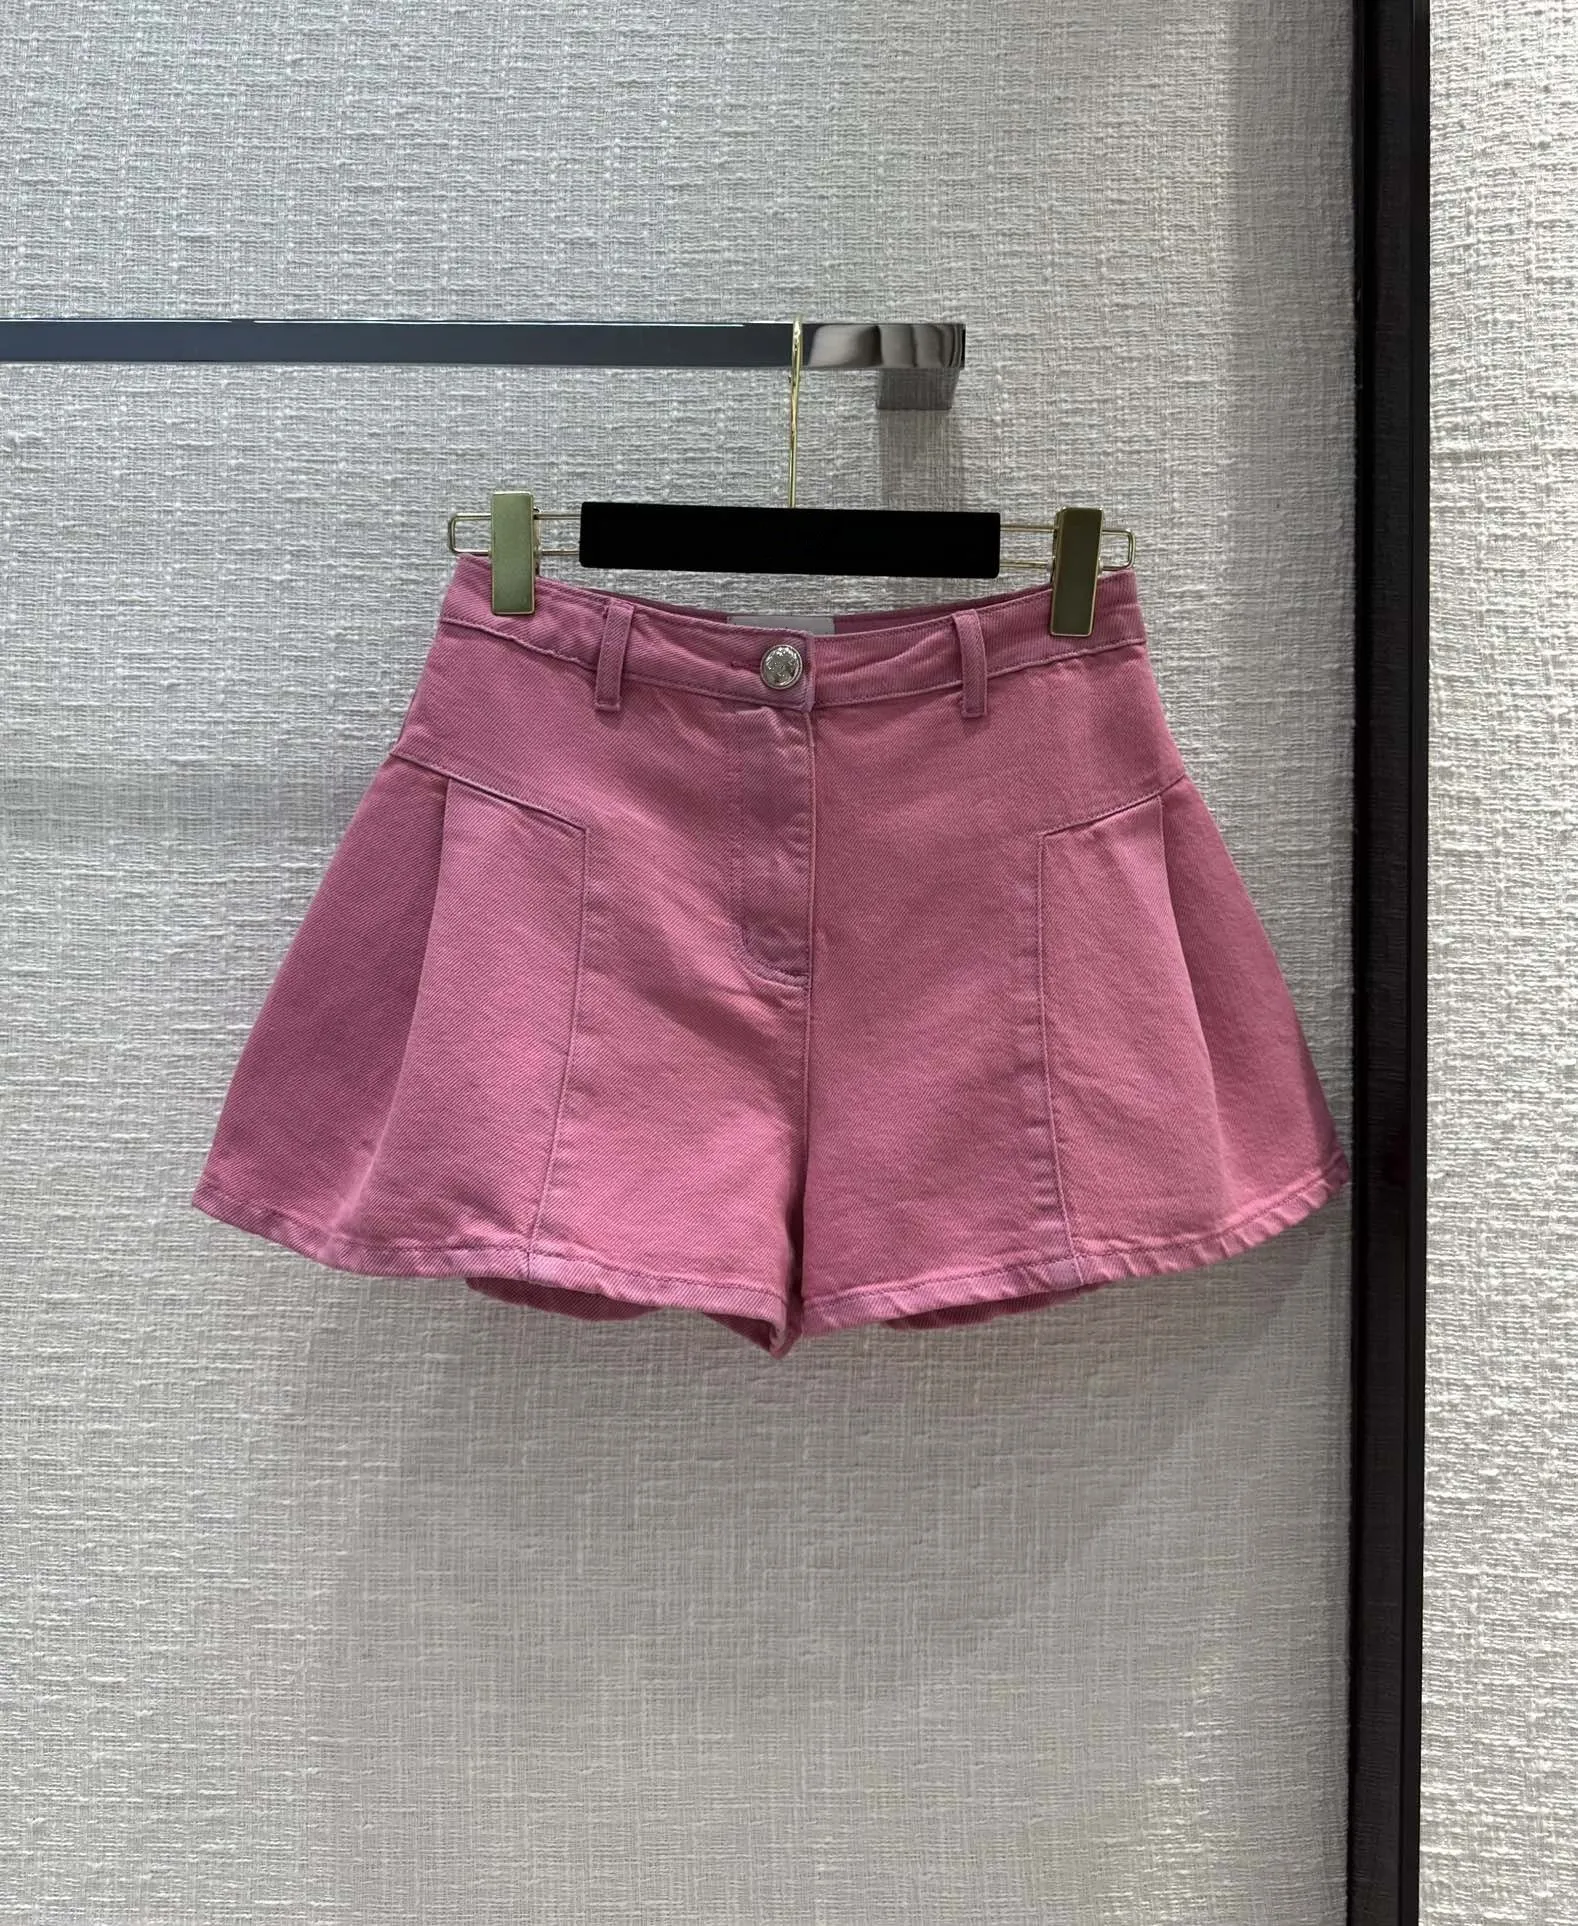 WOMAN PANT JEAN SHORTS 	 WOMAN SKIRT PANTI Woman clothes CLOTHING Mini Skirts shorts women SUMMER pants for women   Casual Short